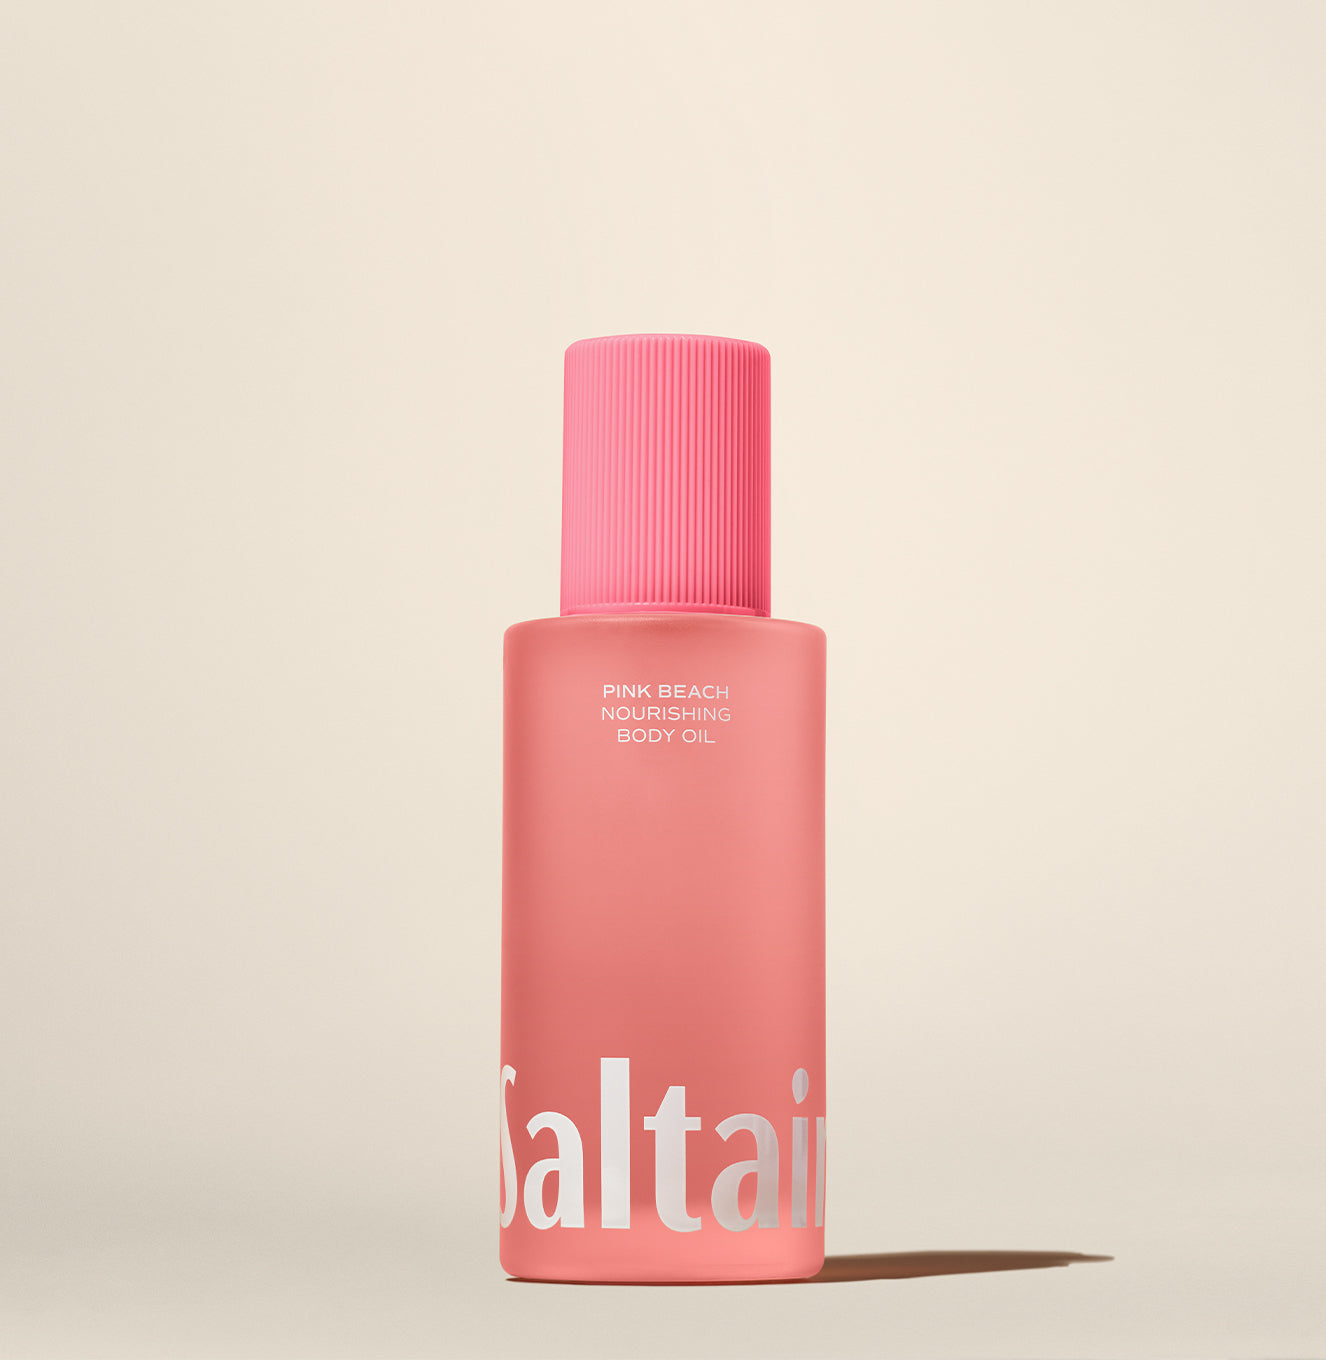 Pink Beach Body Oil For Dewy, Glowing Skin | Saltair